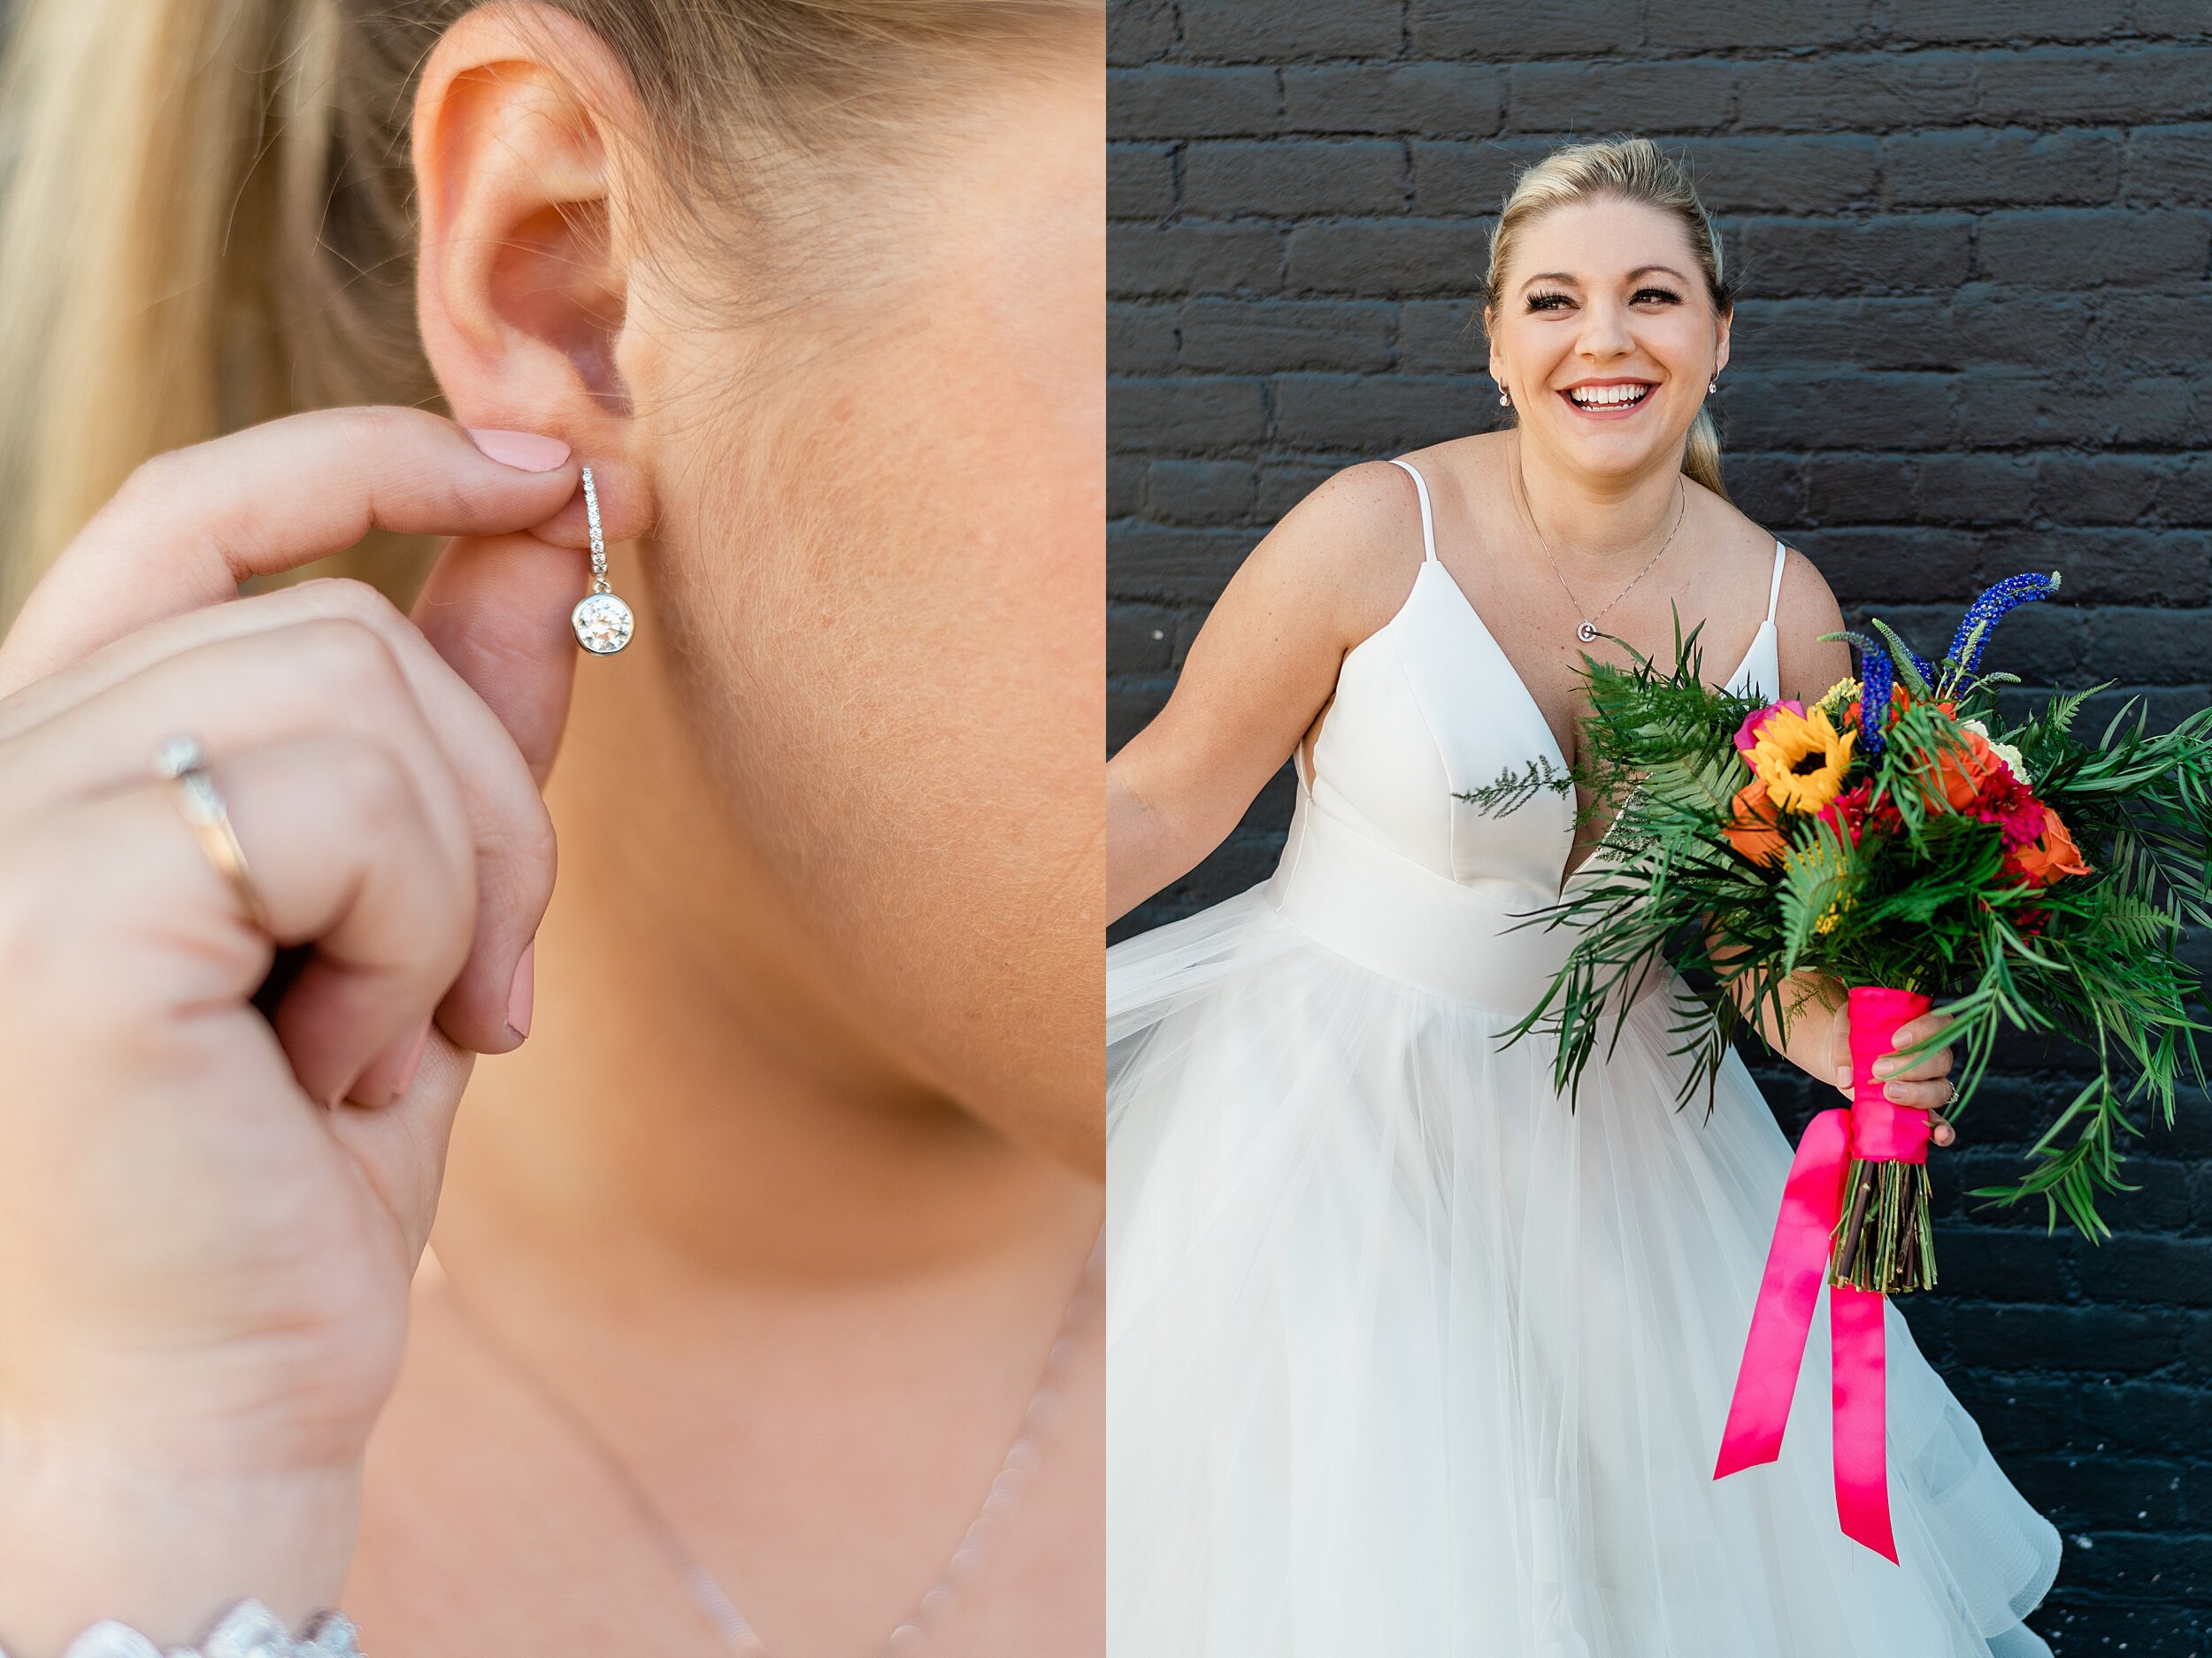 sisters-bridal-boutique-laudicks-jewelry-betsys-bouquets-van-wert-ohio-wedding-photographer-the-association-photography_6897.jpg